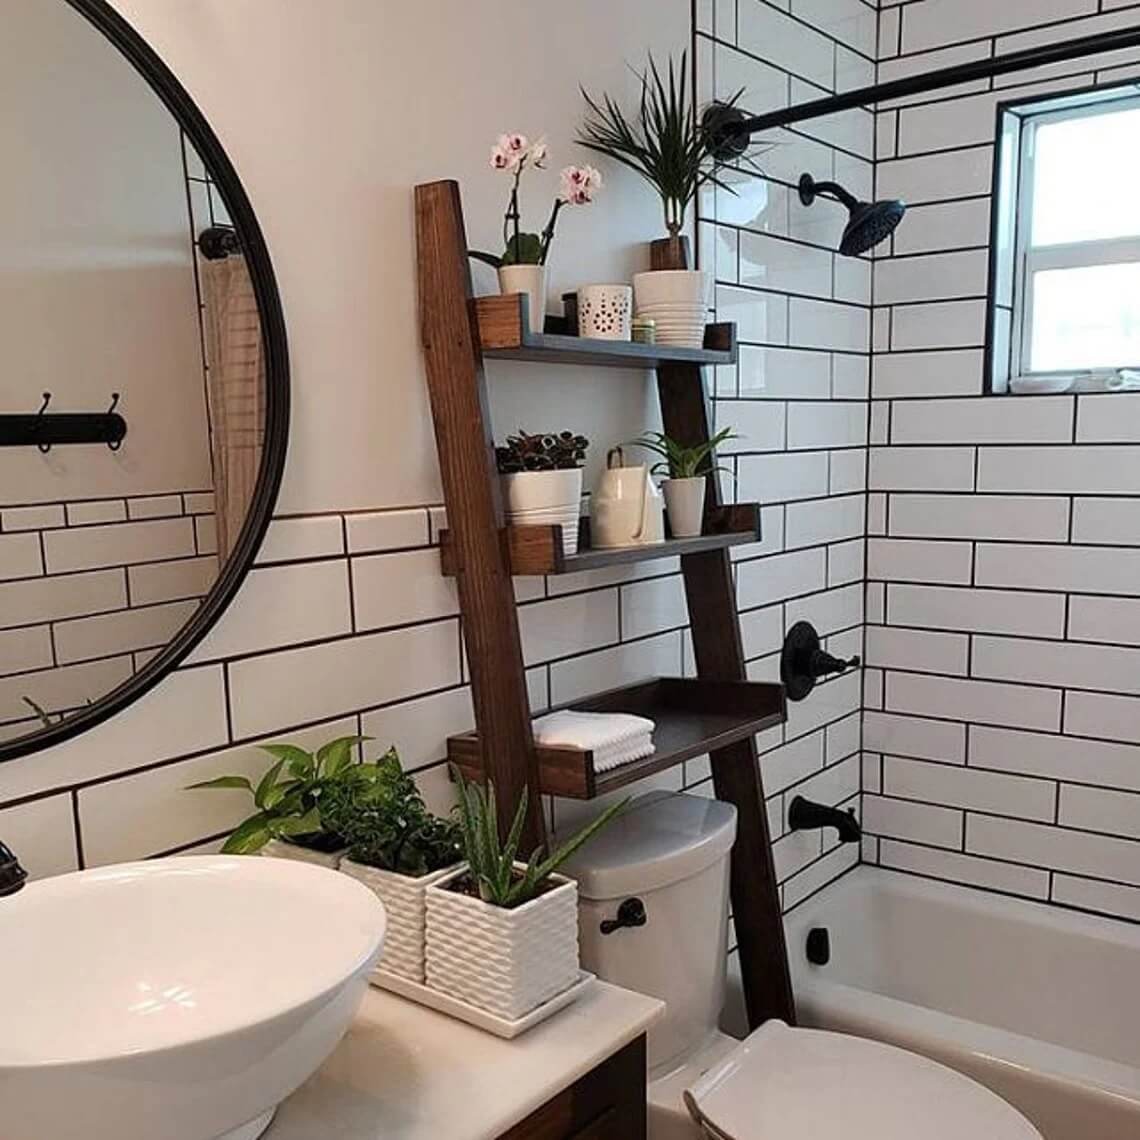 etsy shelves above the toilet tiny bathroom design nordroom 60 Small Bathroom Ideas